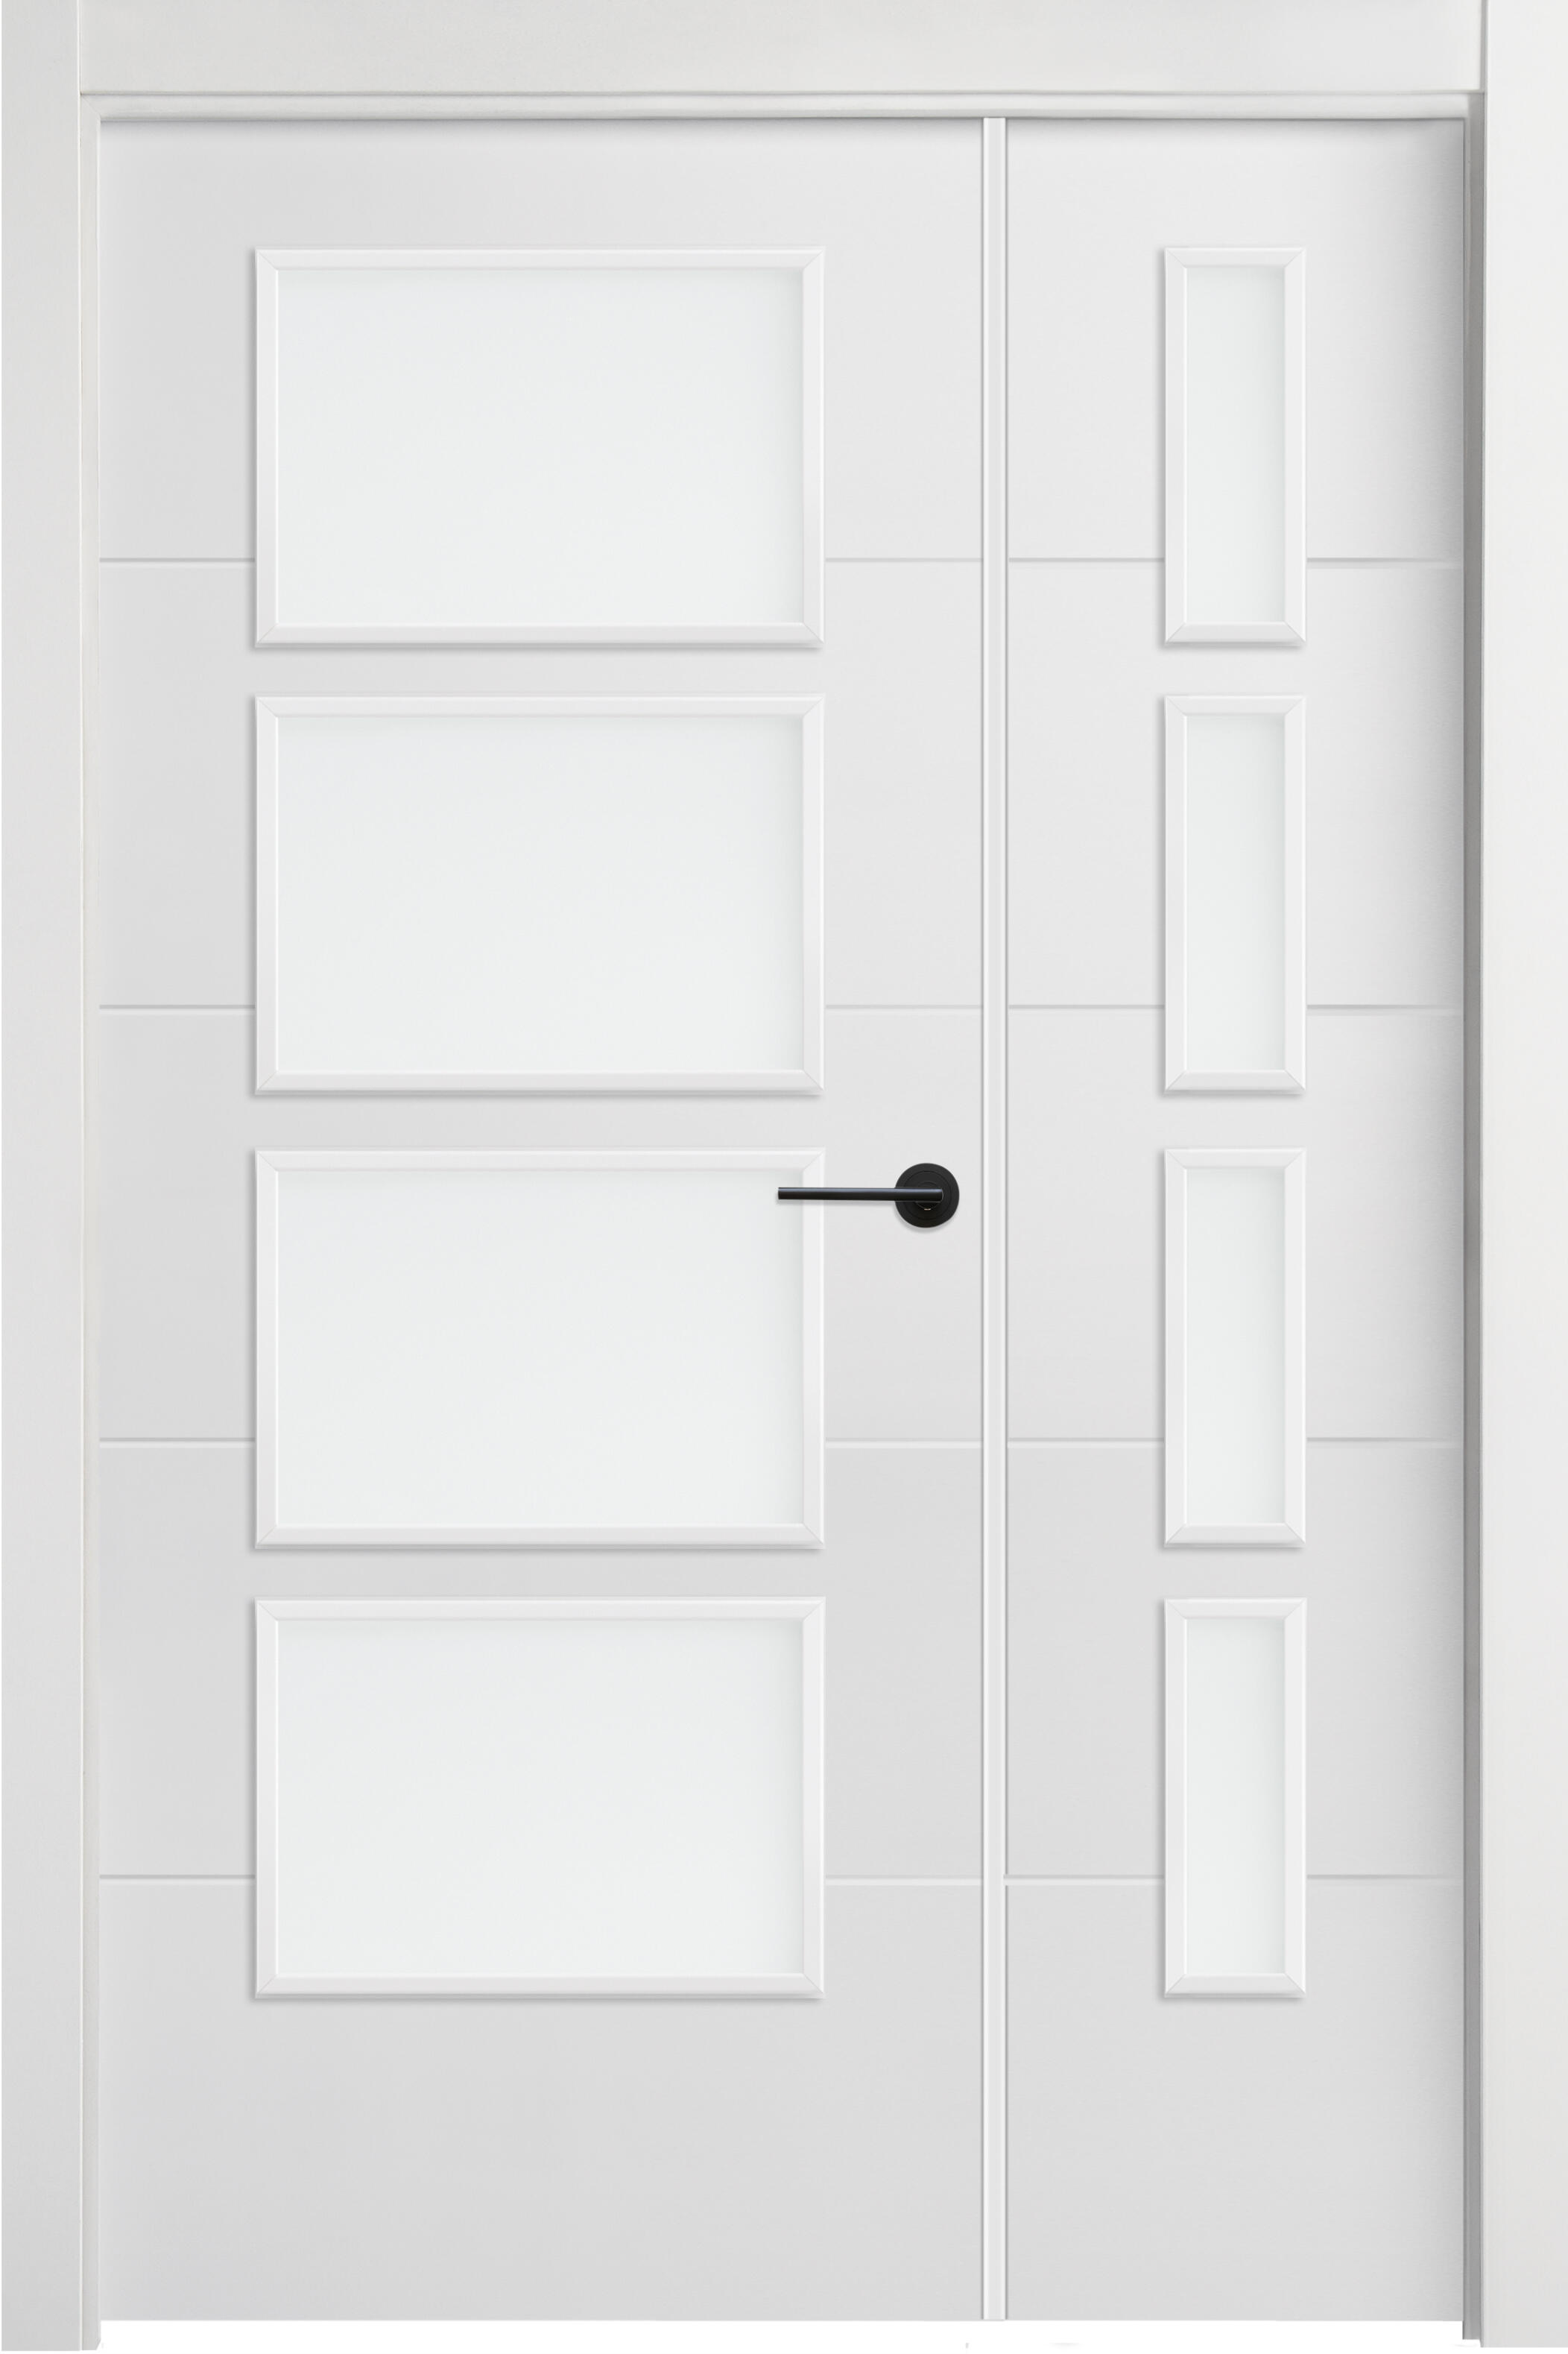 Puerta lucerna plus black blanco de apertura izquierdacon cristal de 11x105 cm